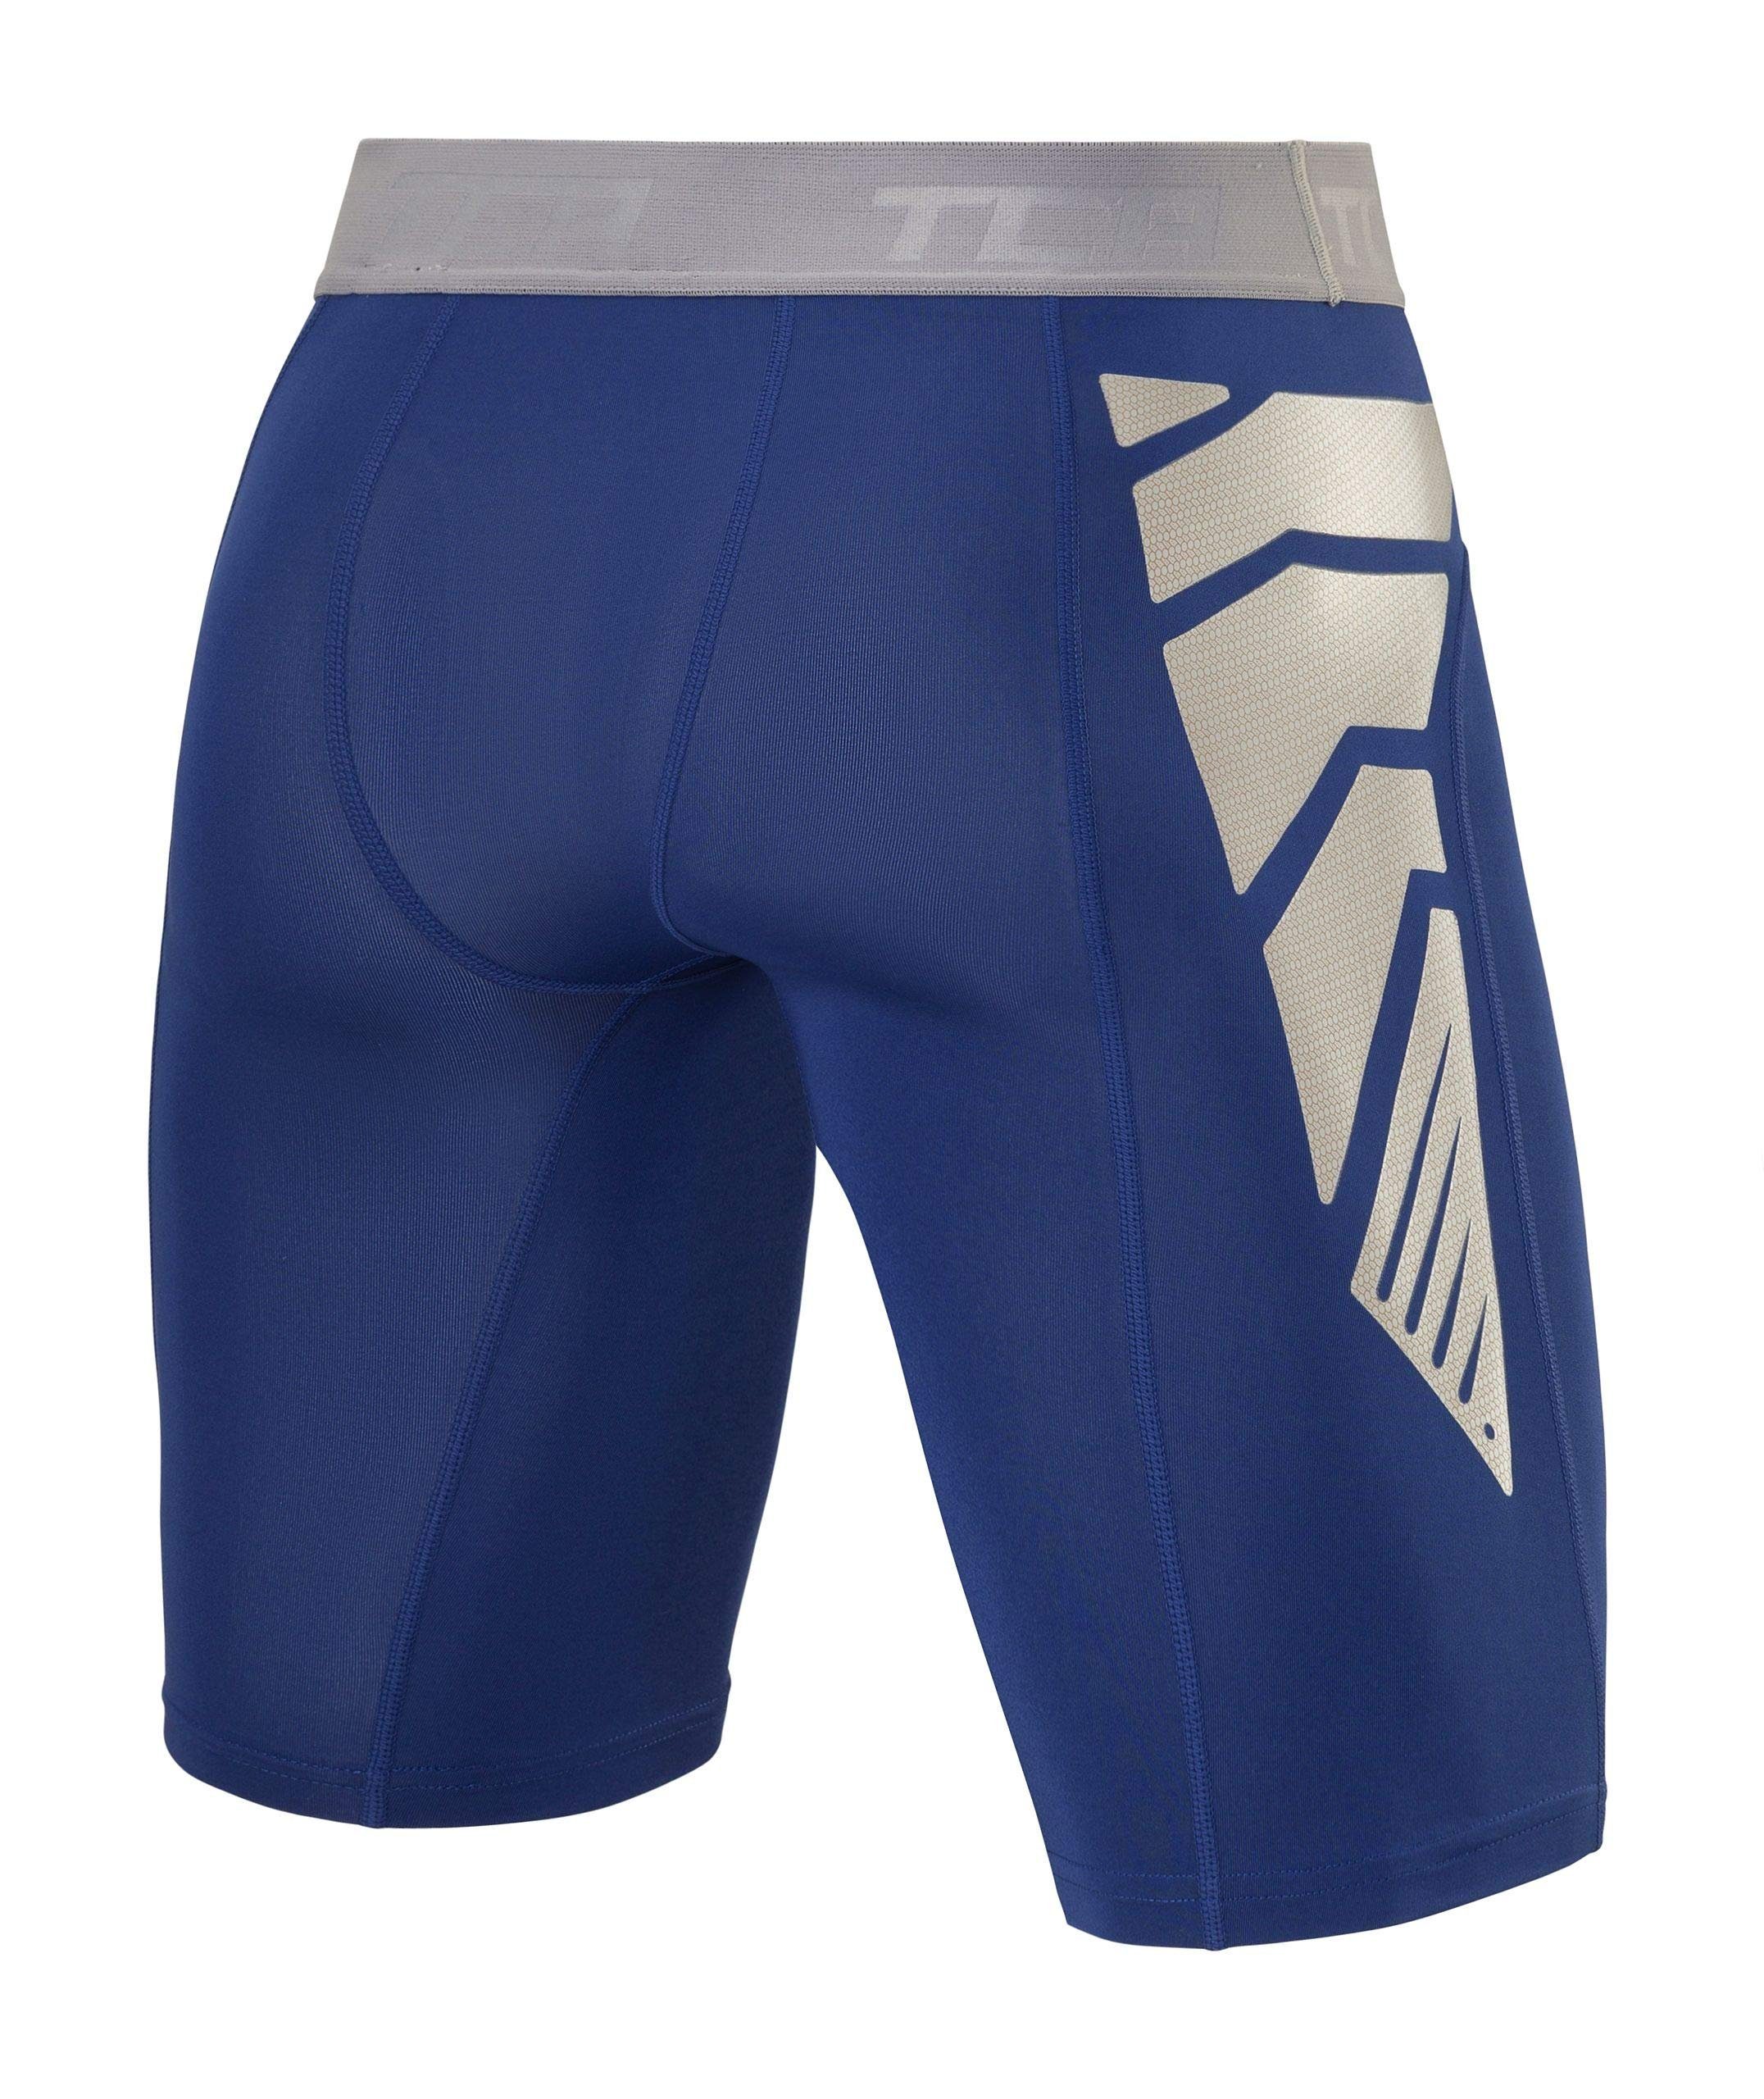 CarbonForce Thermo TCA Herren TCA - Pro Unterziehshirt Shorts Blau